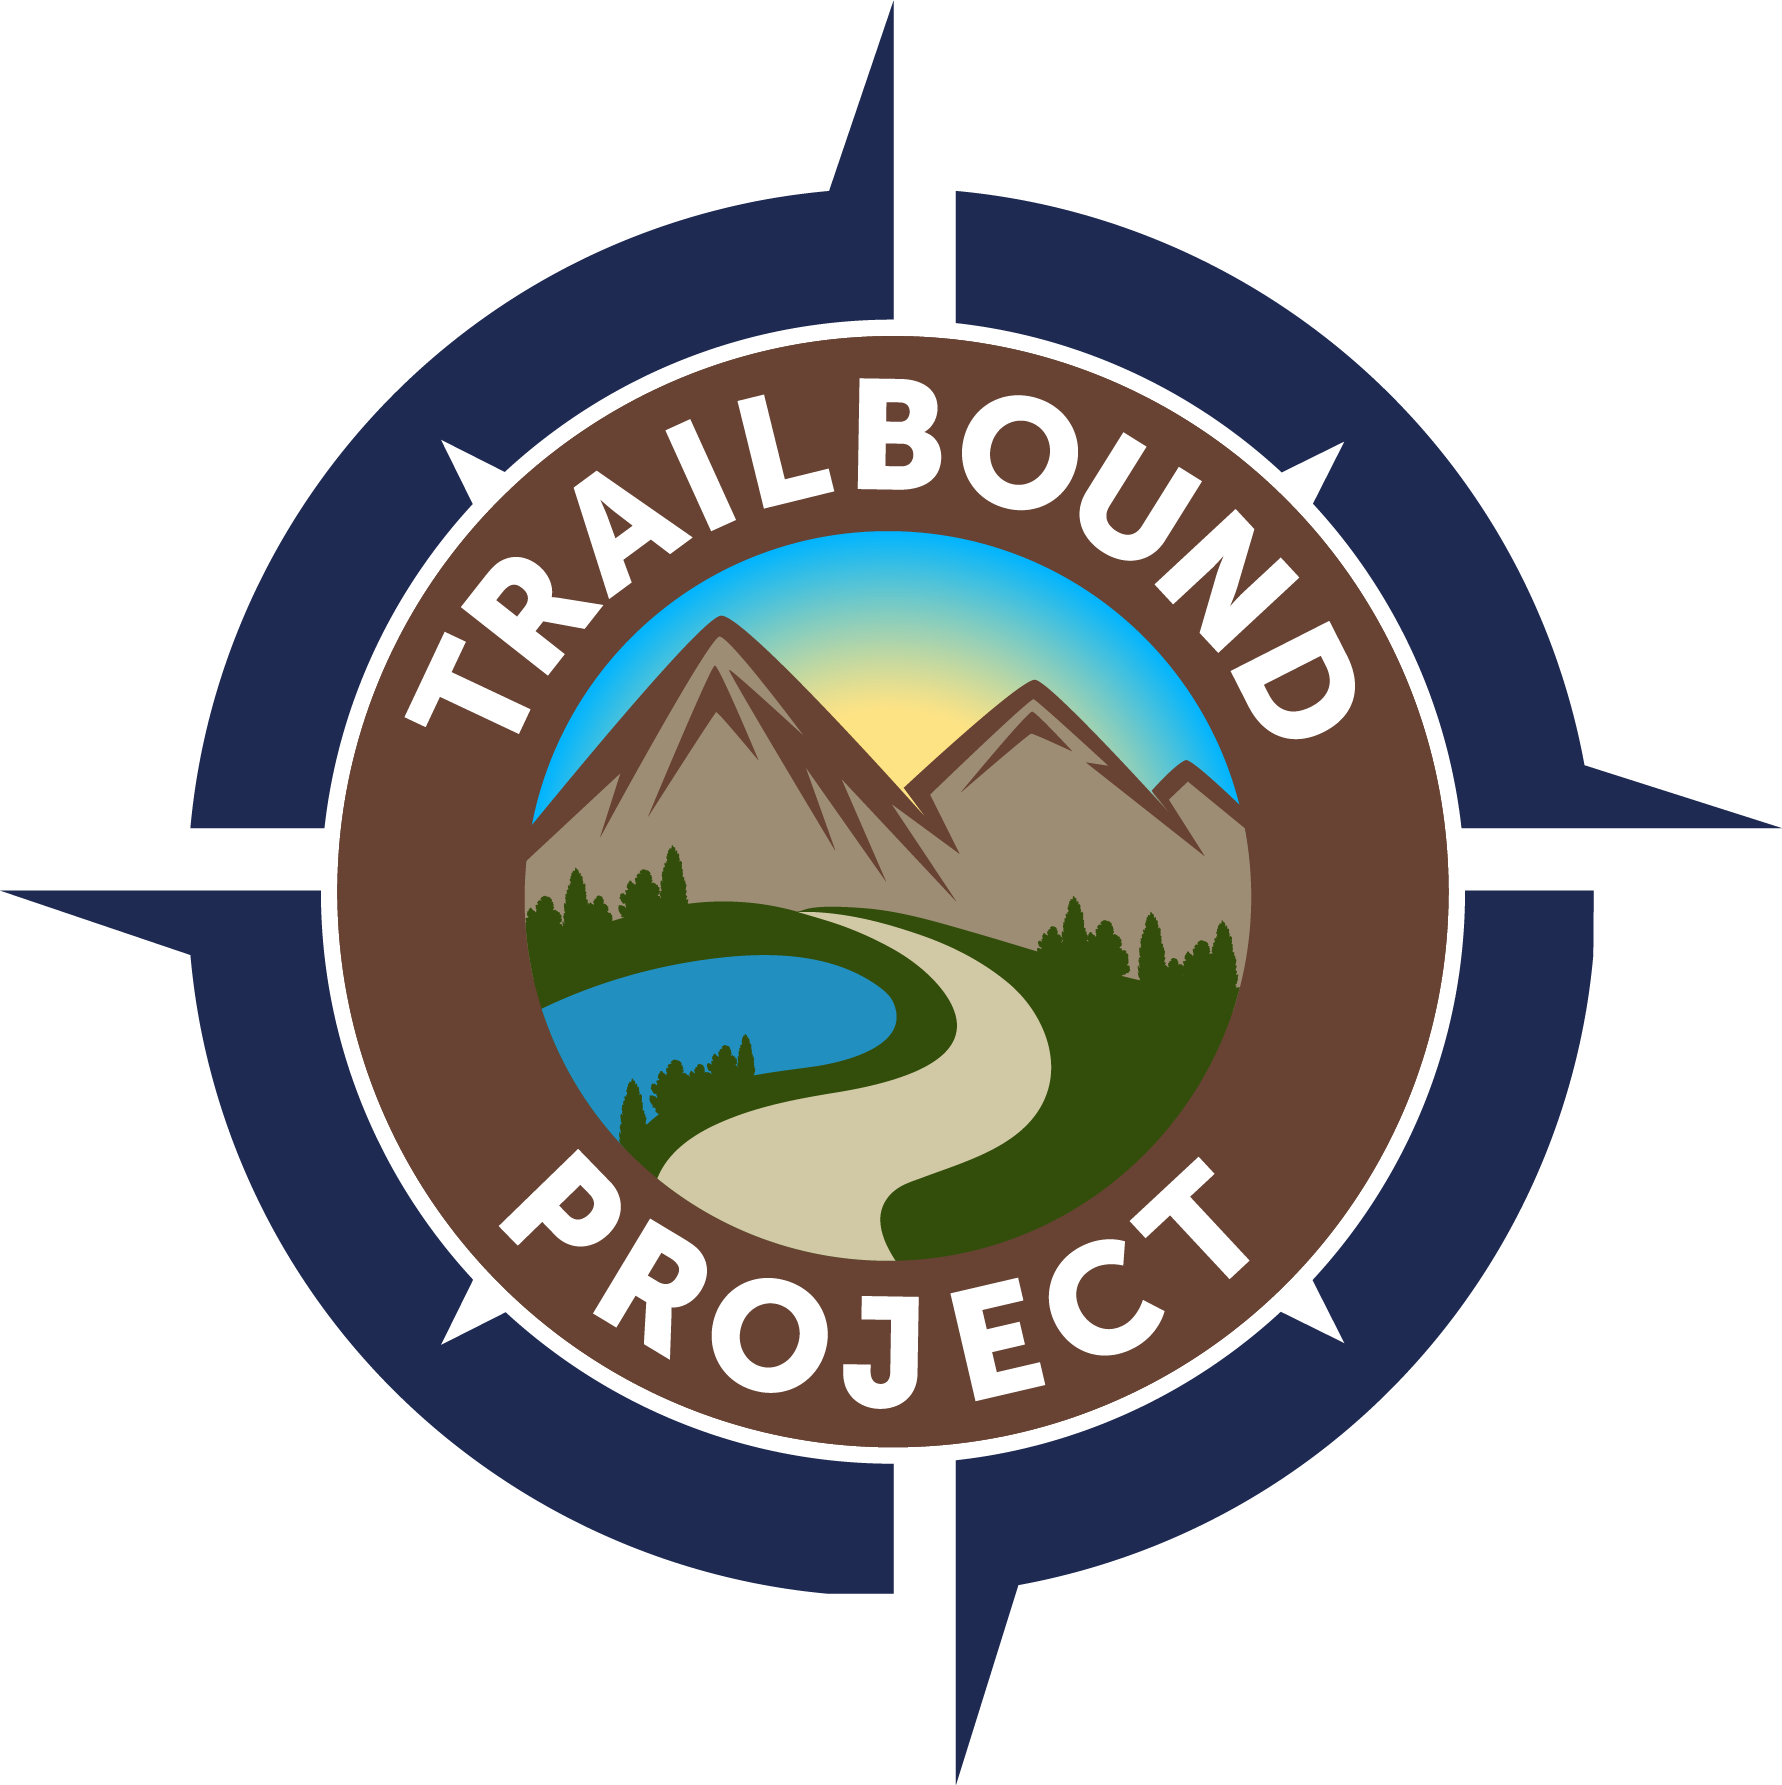 TrailBound Project logo